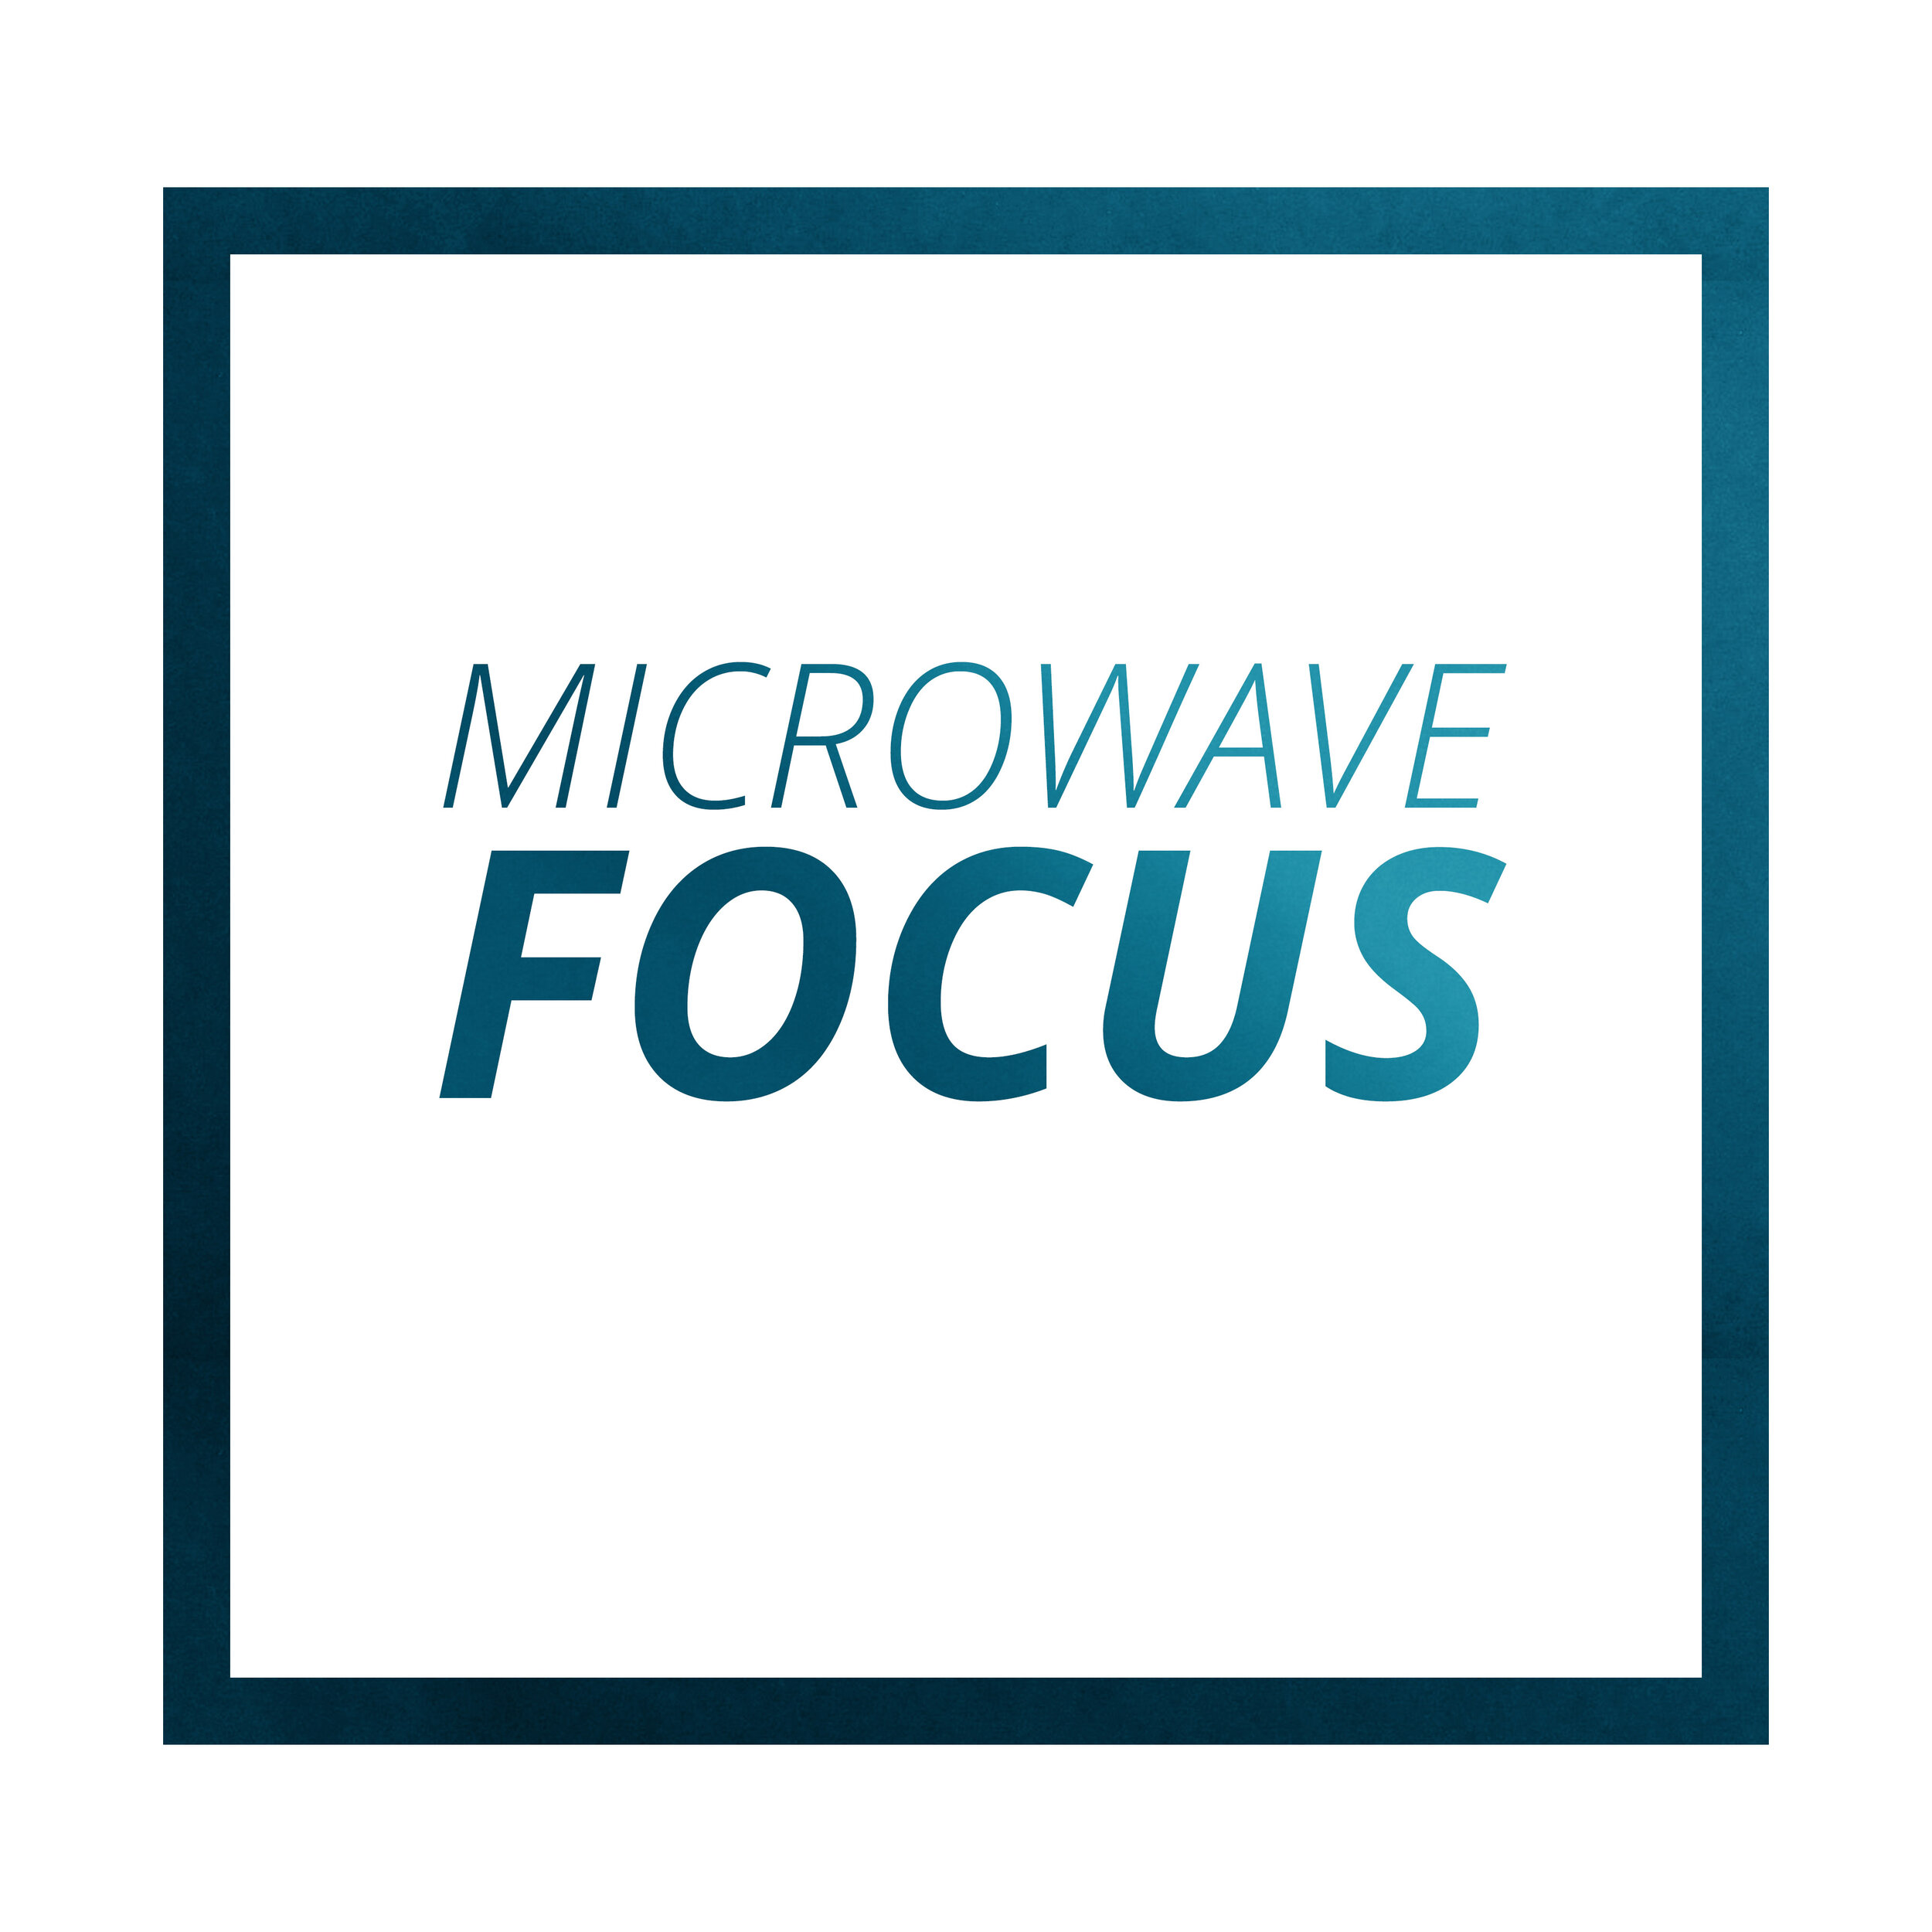 Microwave Focus